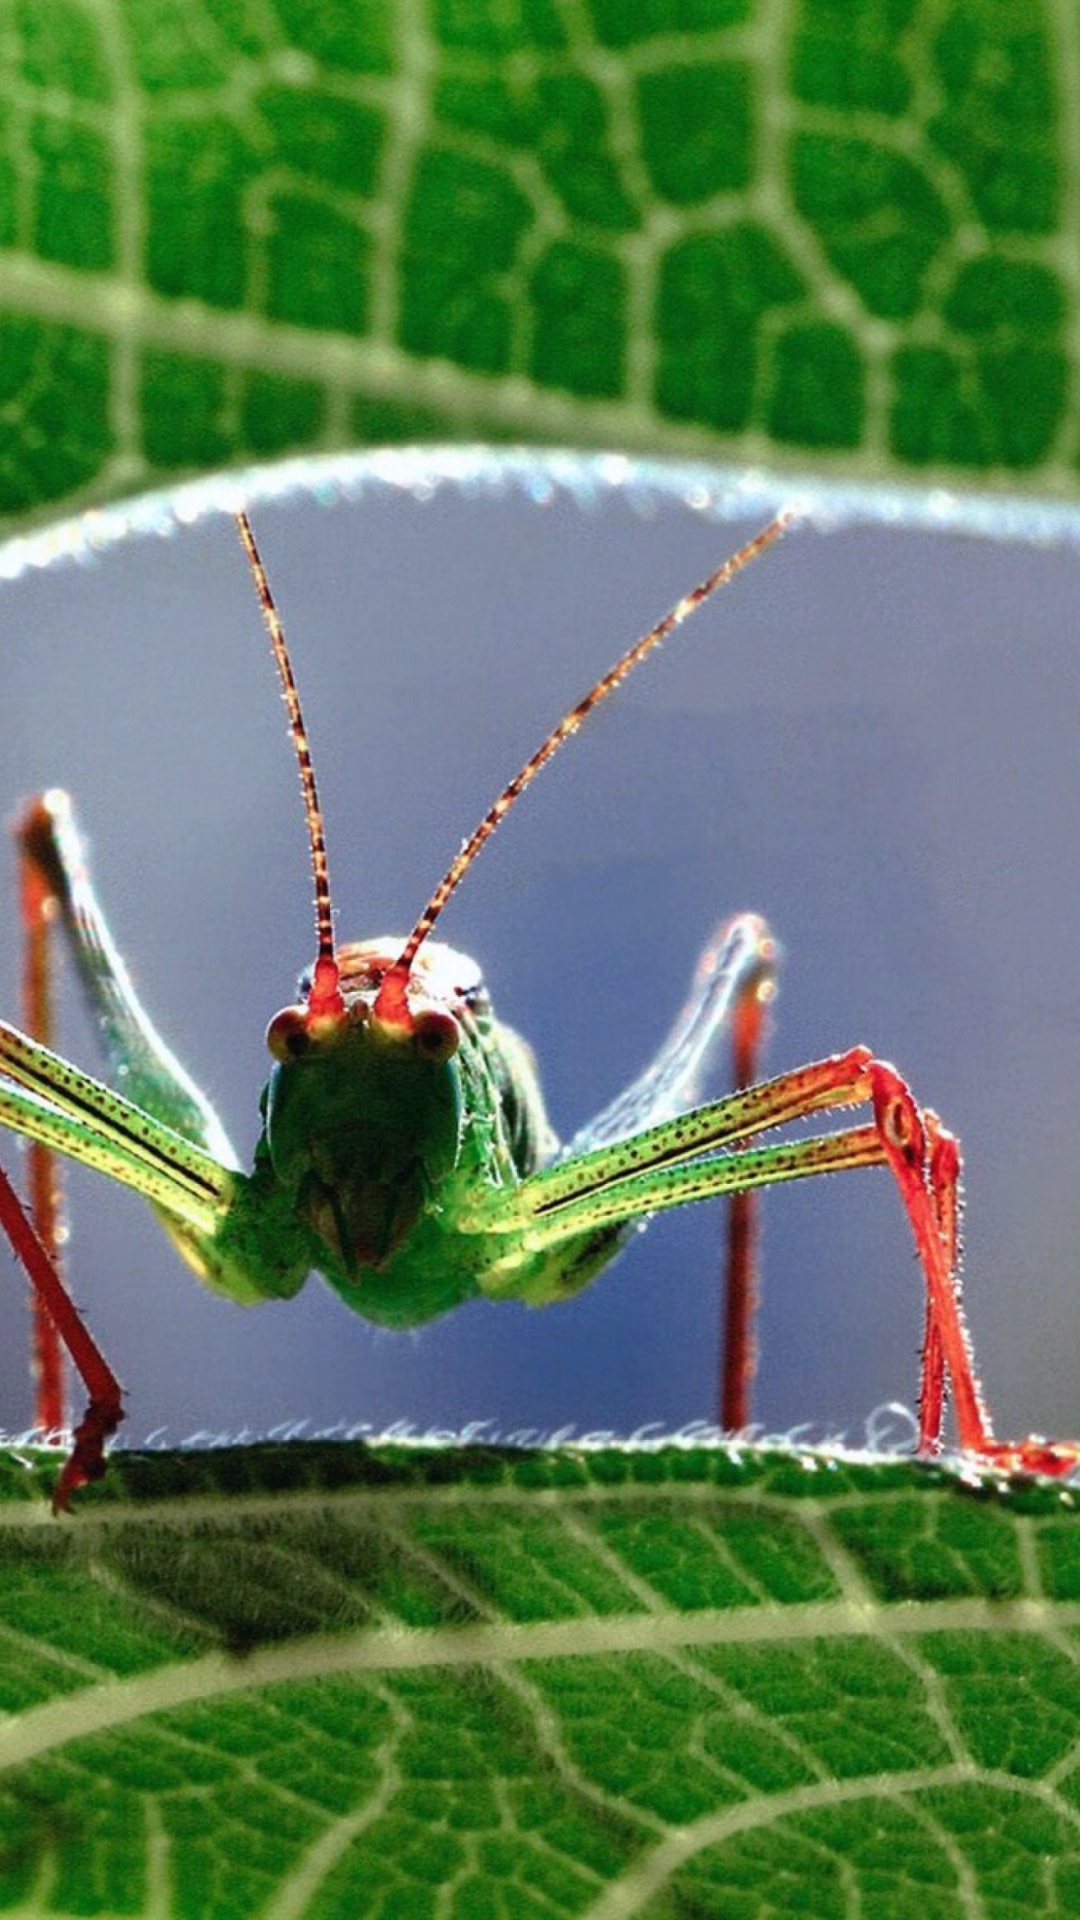 Grasshopper wallpaper 1080x1920